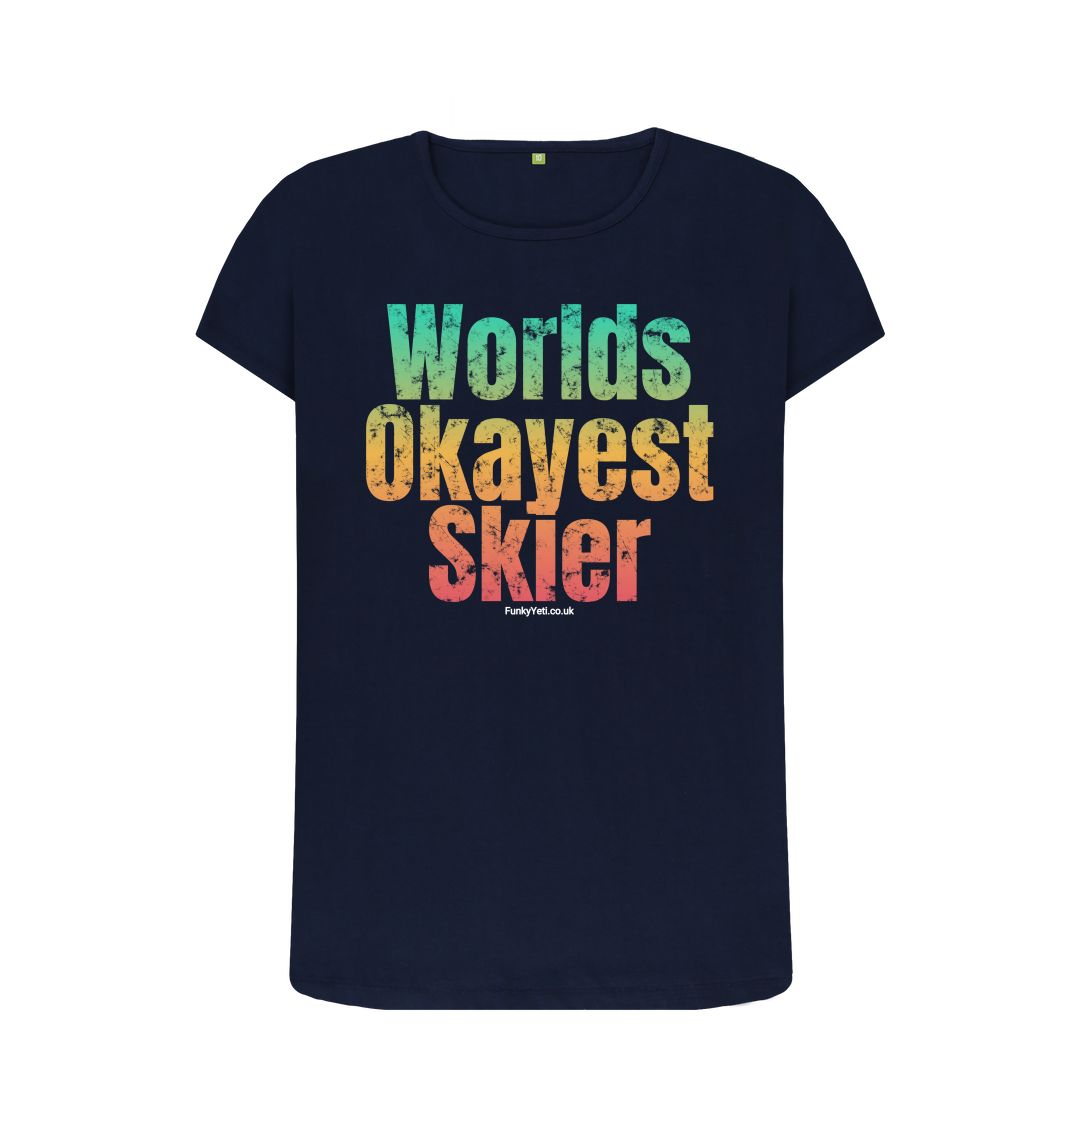 Navy Blue Funky Yeti Women's Tee - Worlds Okayest Skier